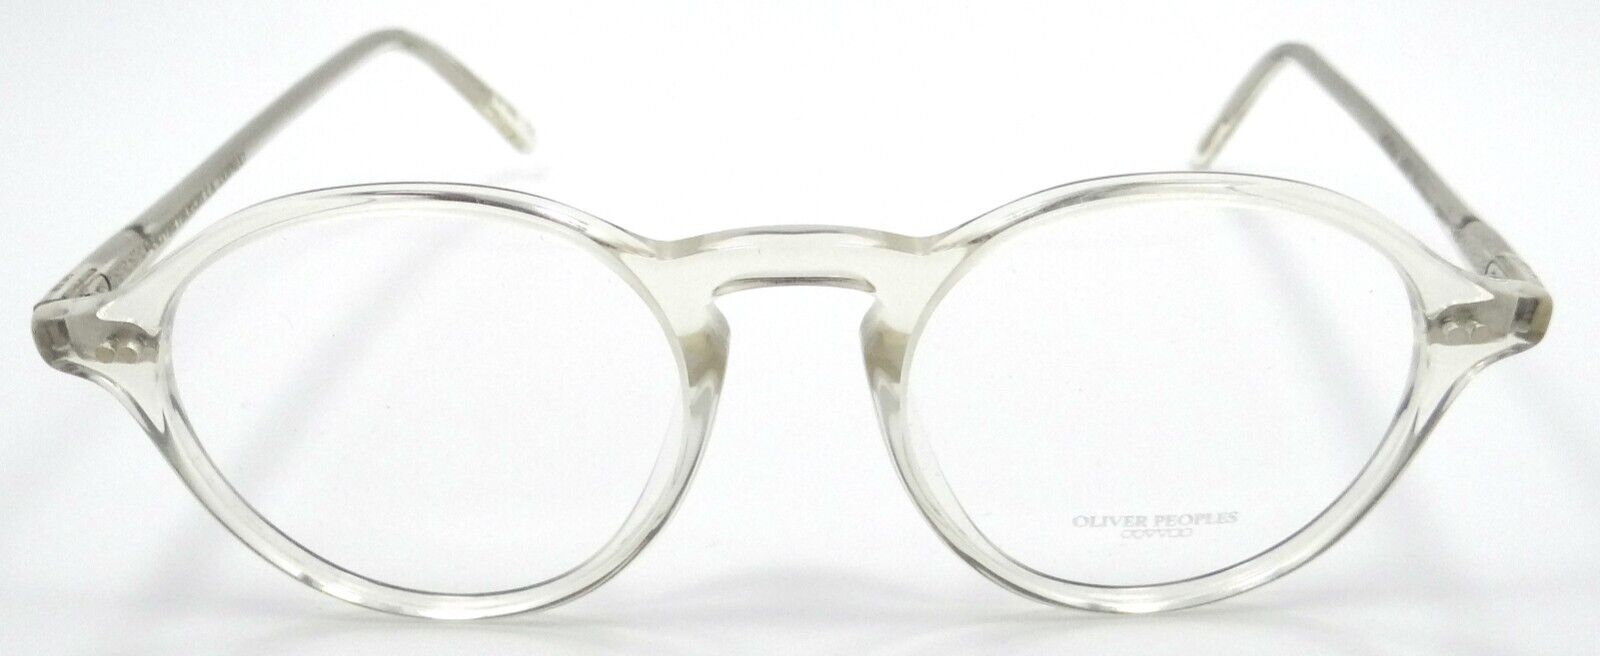 Oliver Peoples Eyeglasses Frames OV 5445U 1692 48-19-145 Maxson Pale Citrine-827934452619-classypw.com-1